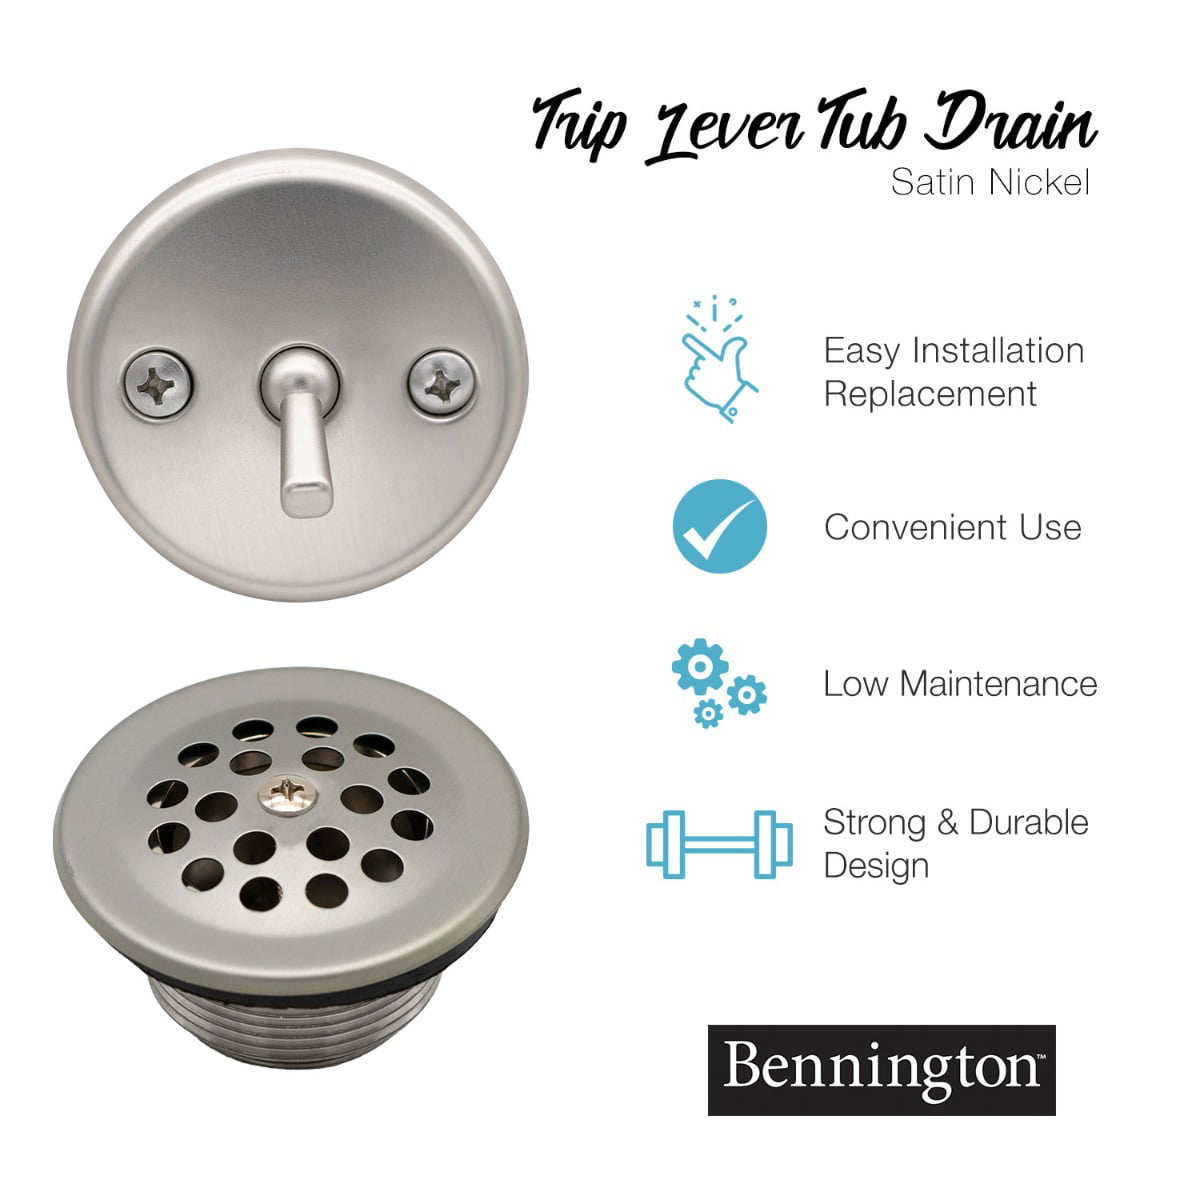 Bathtub Trip Lever Bath Drain, How To Replace Bathtub Overflow Plate With Trip Lever